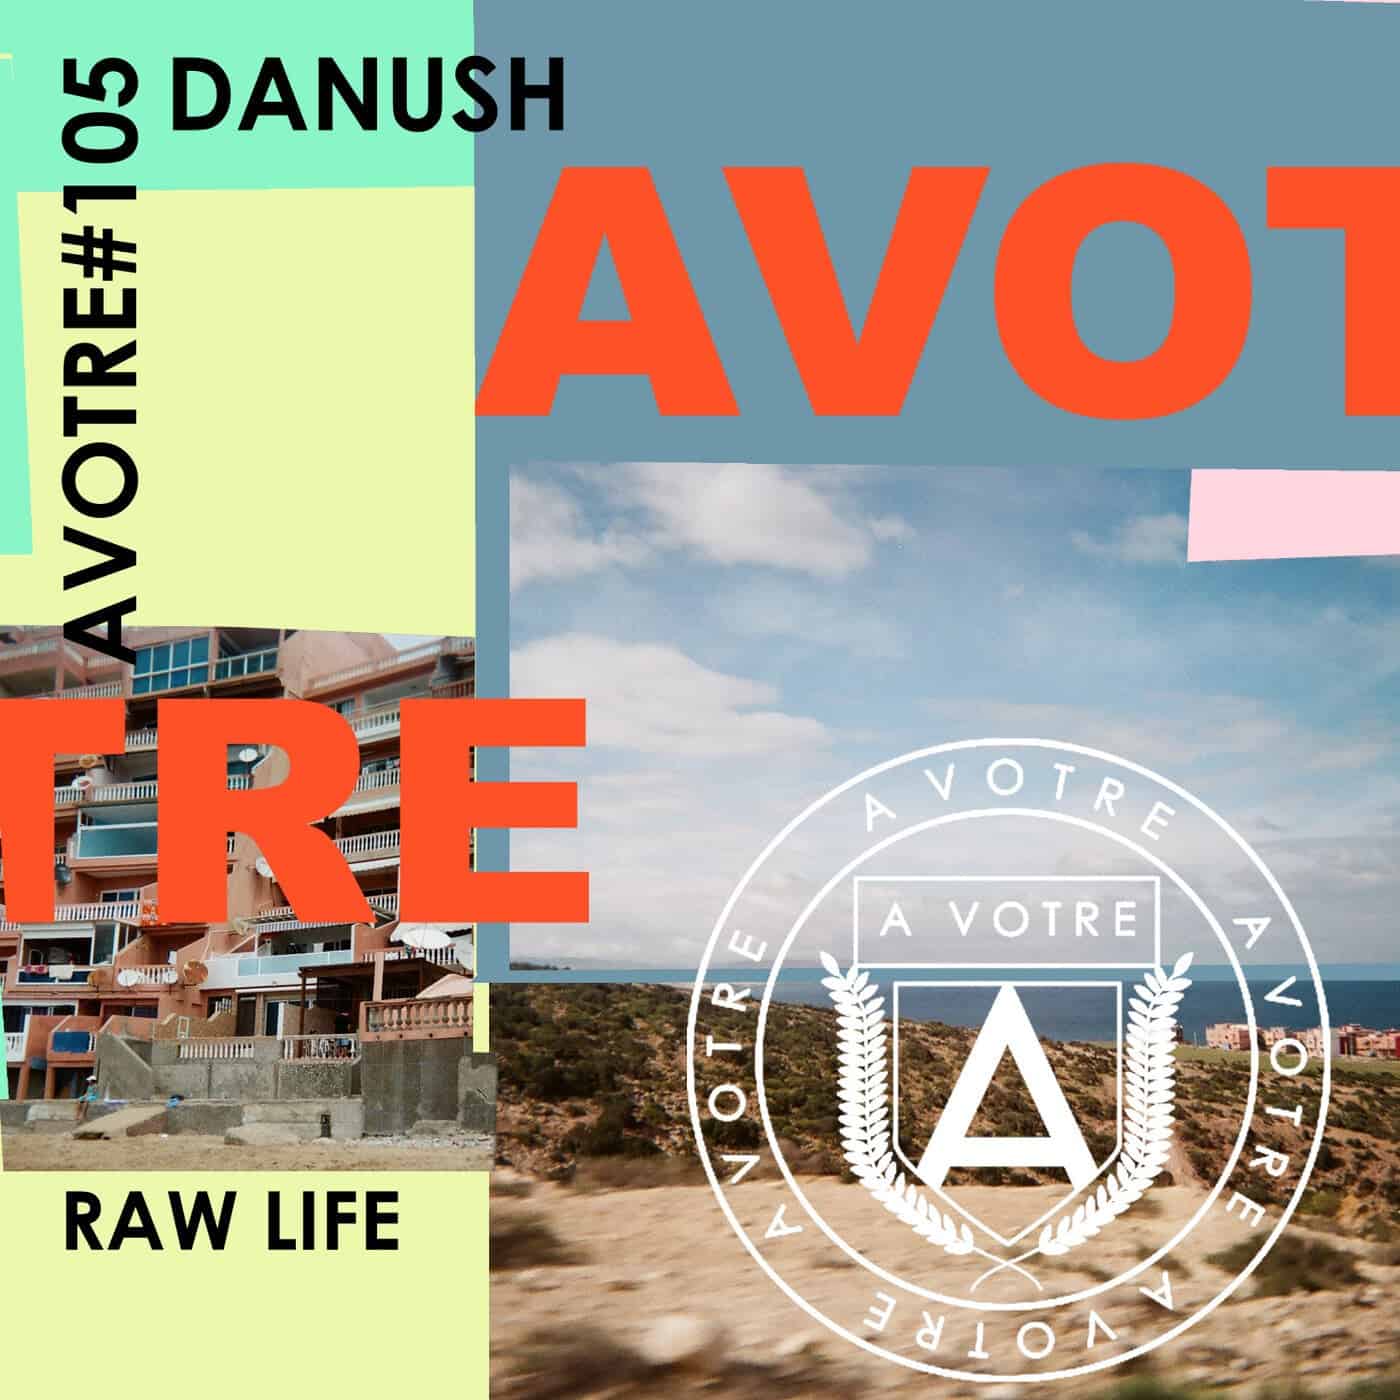 image cover: Danush - Raw Life / AVOTRE105